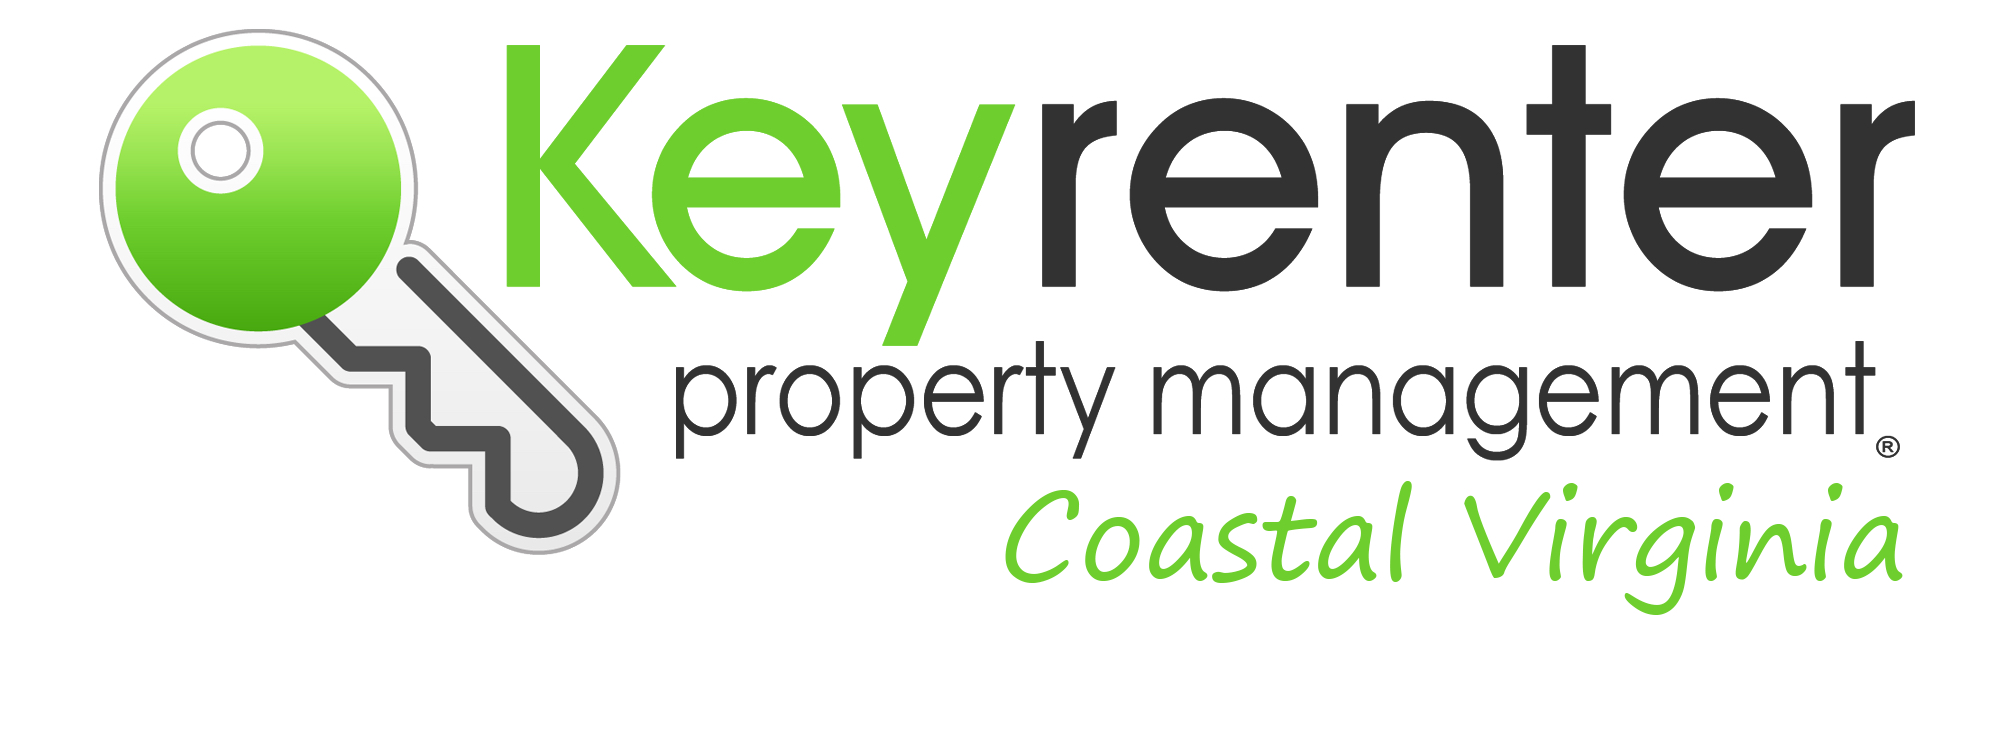 Keyrenter Coastal Virginia Property Management logo